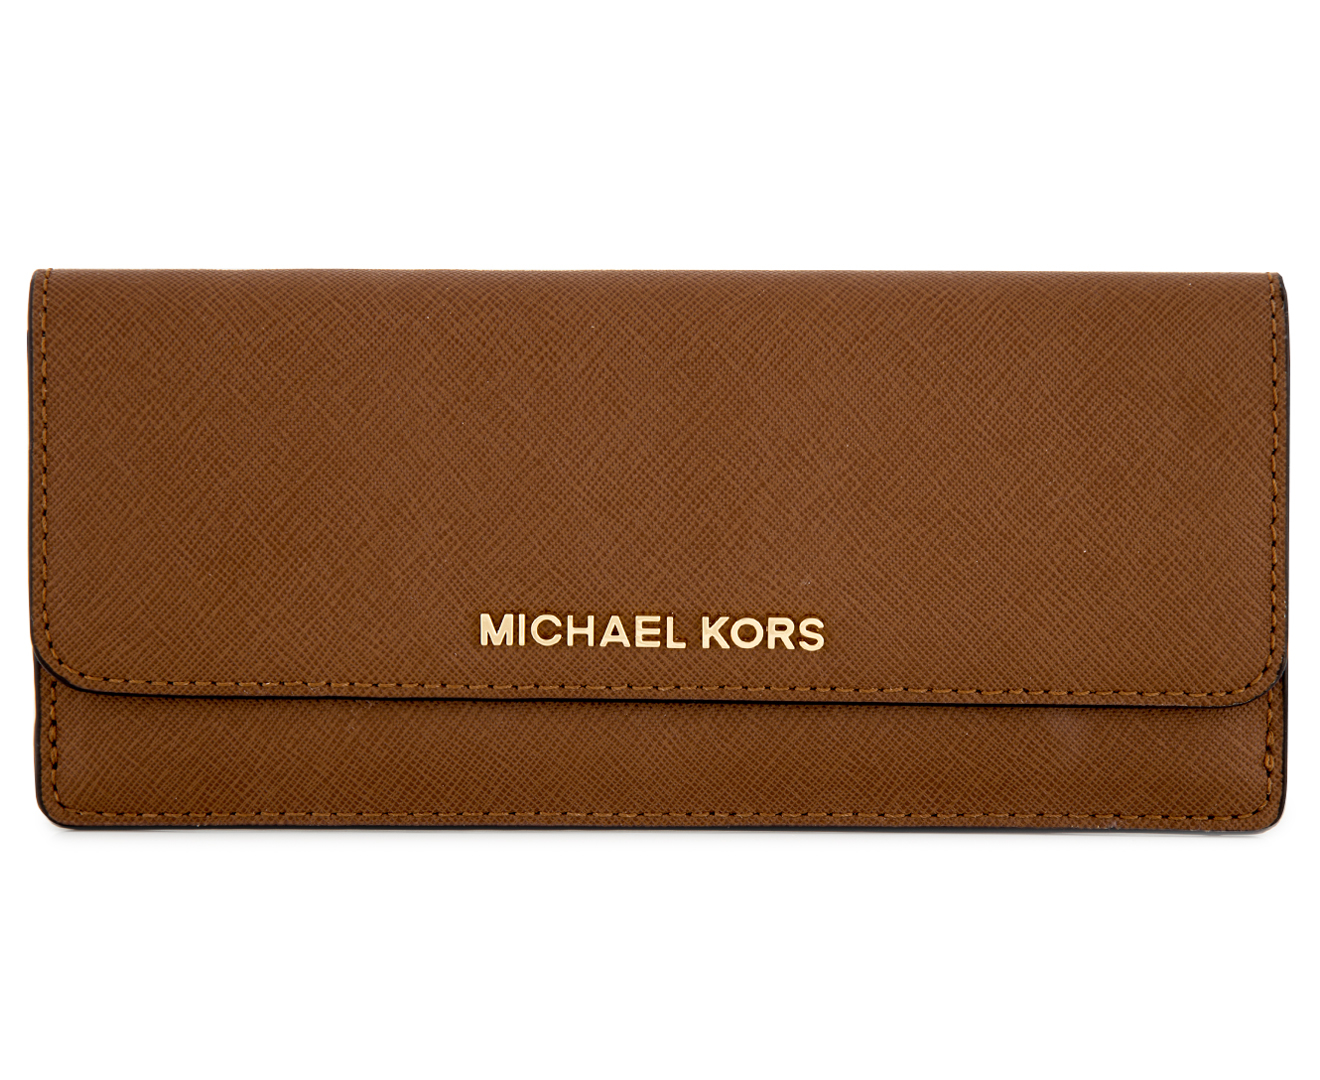 michael kors flat wallet